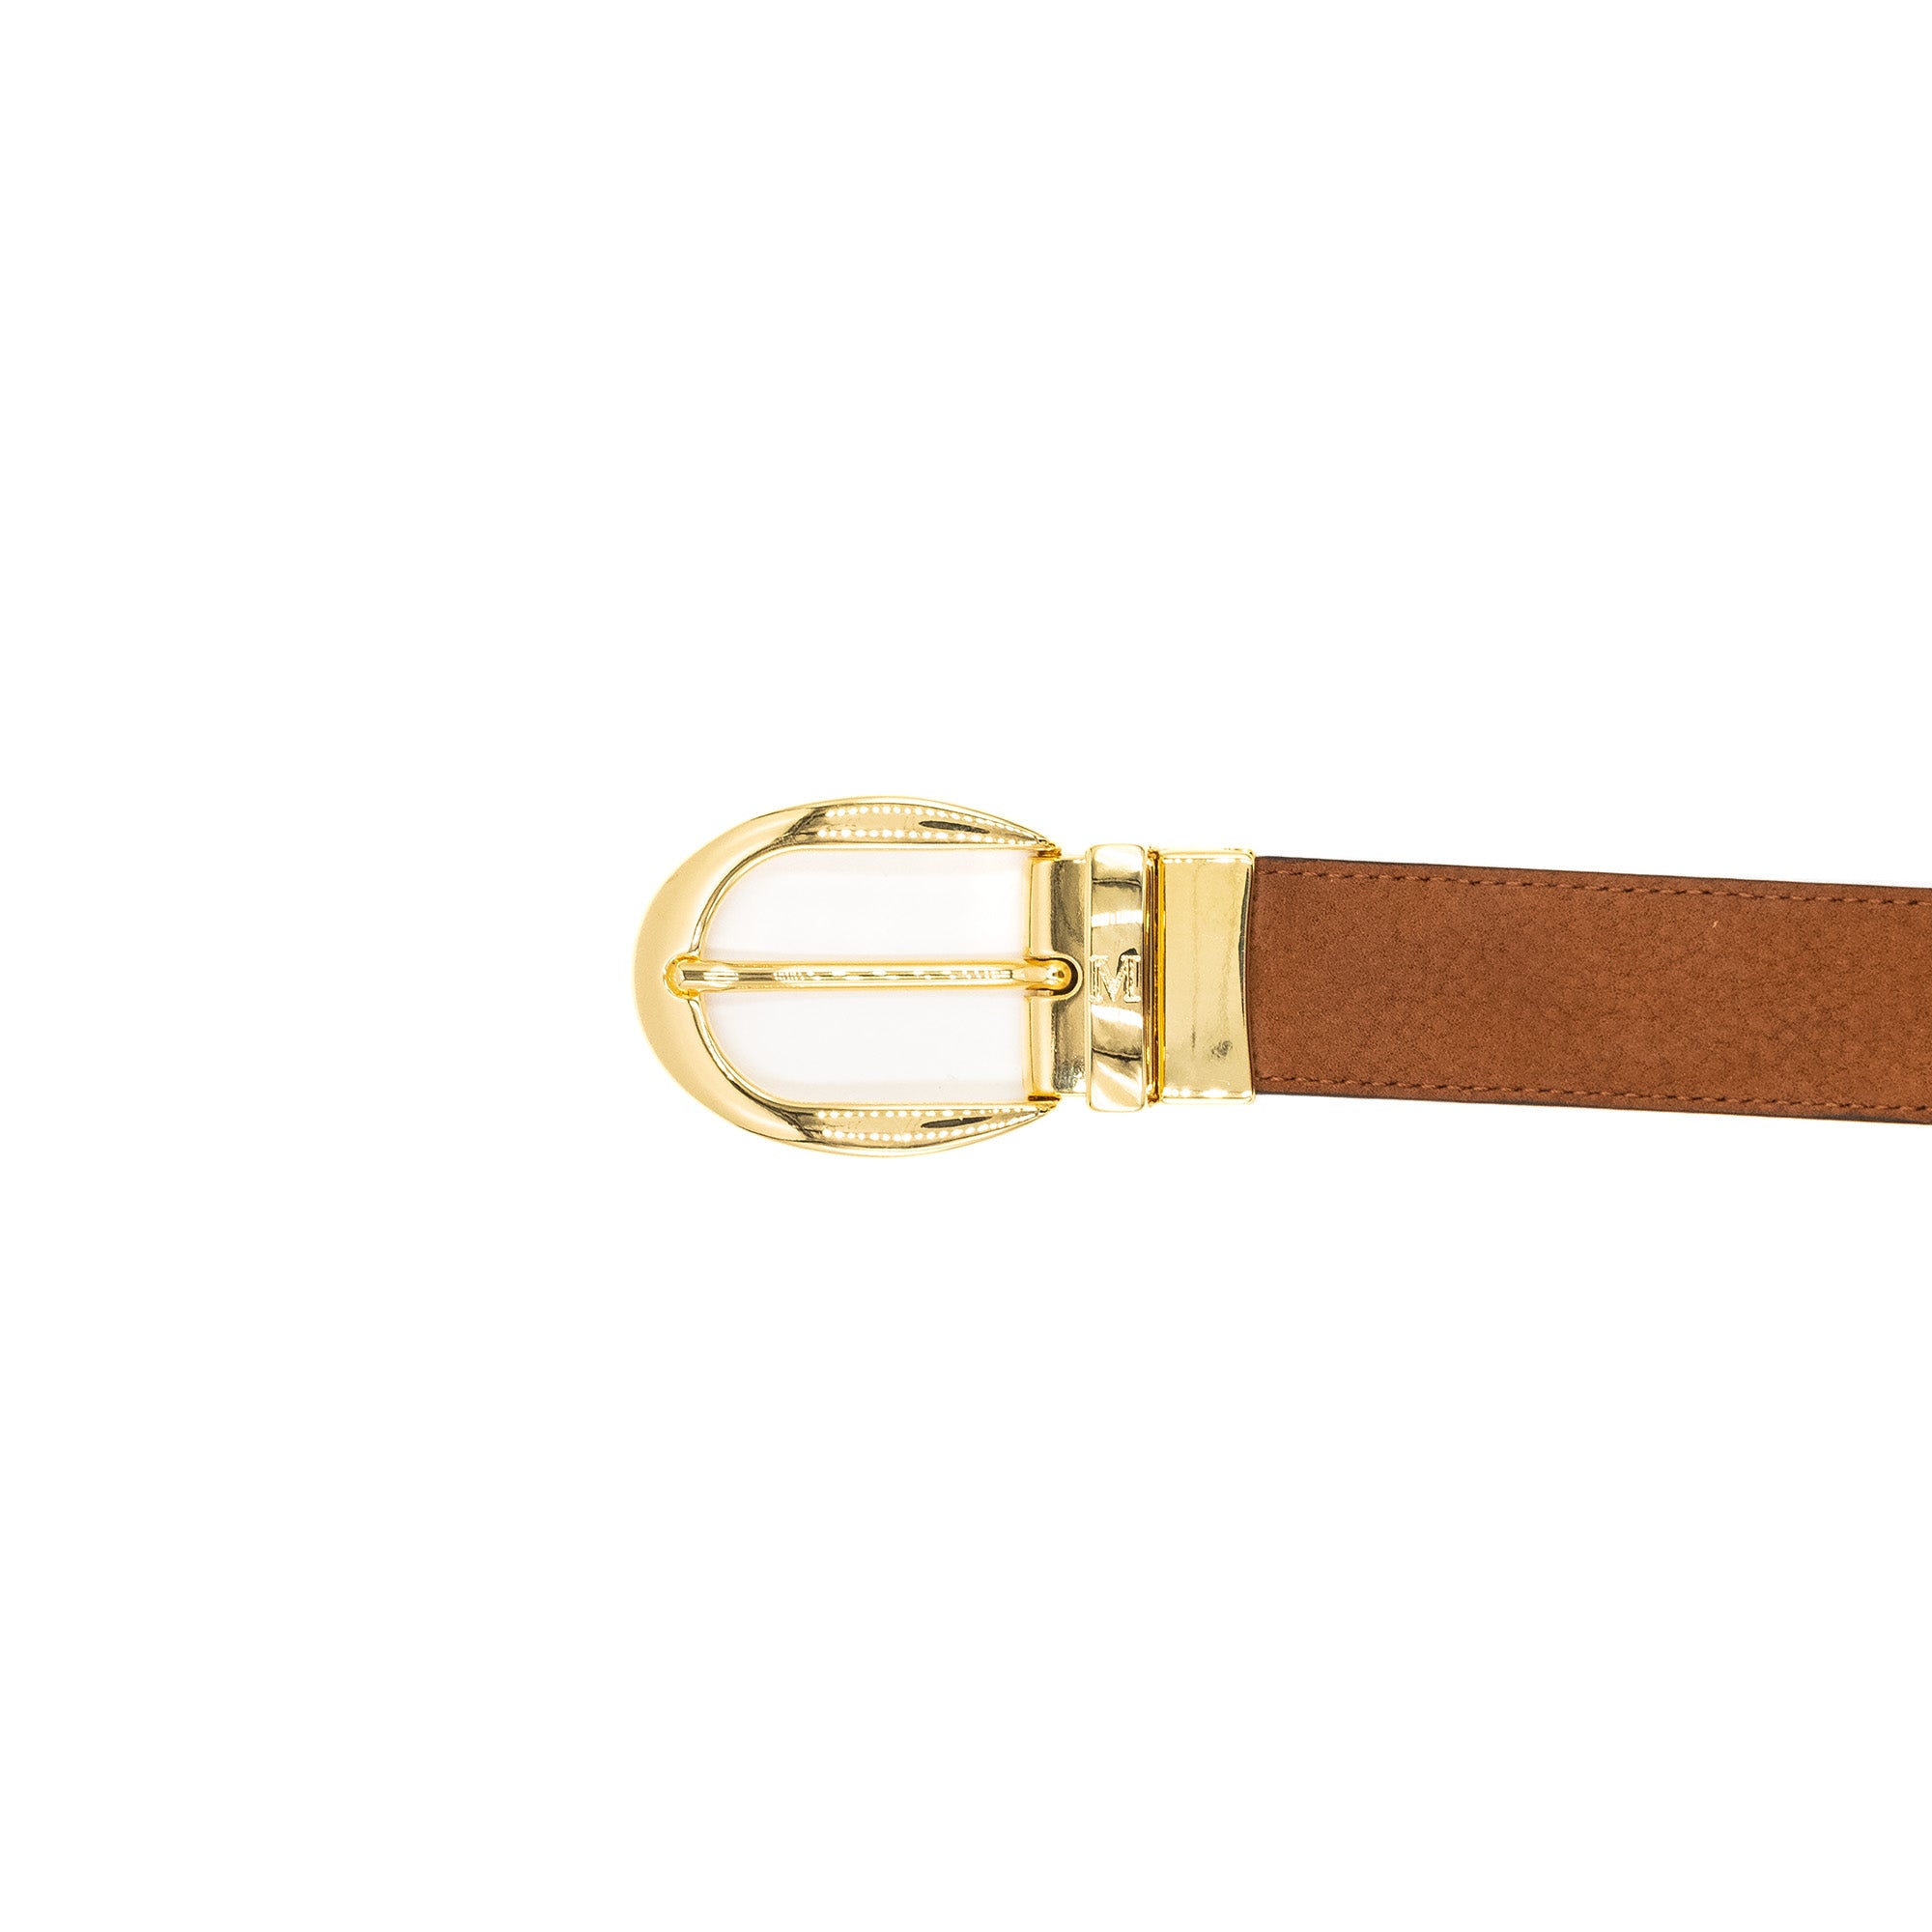 Reversible belt - black calfskin, brown suede